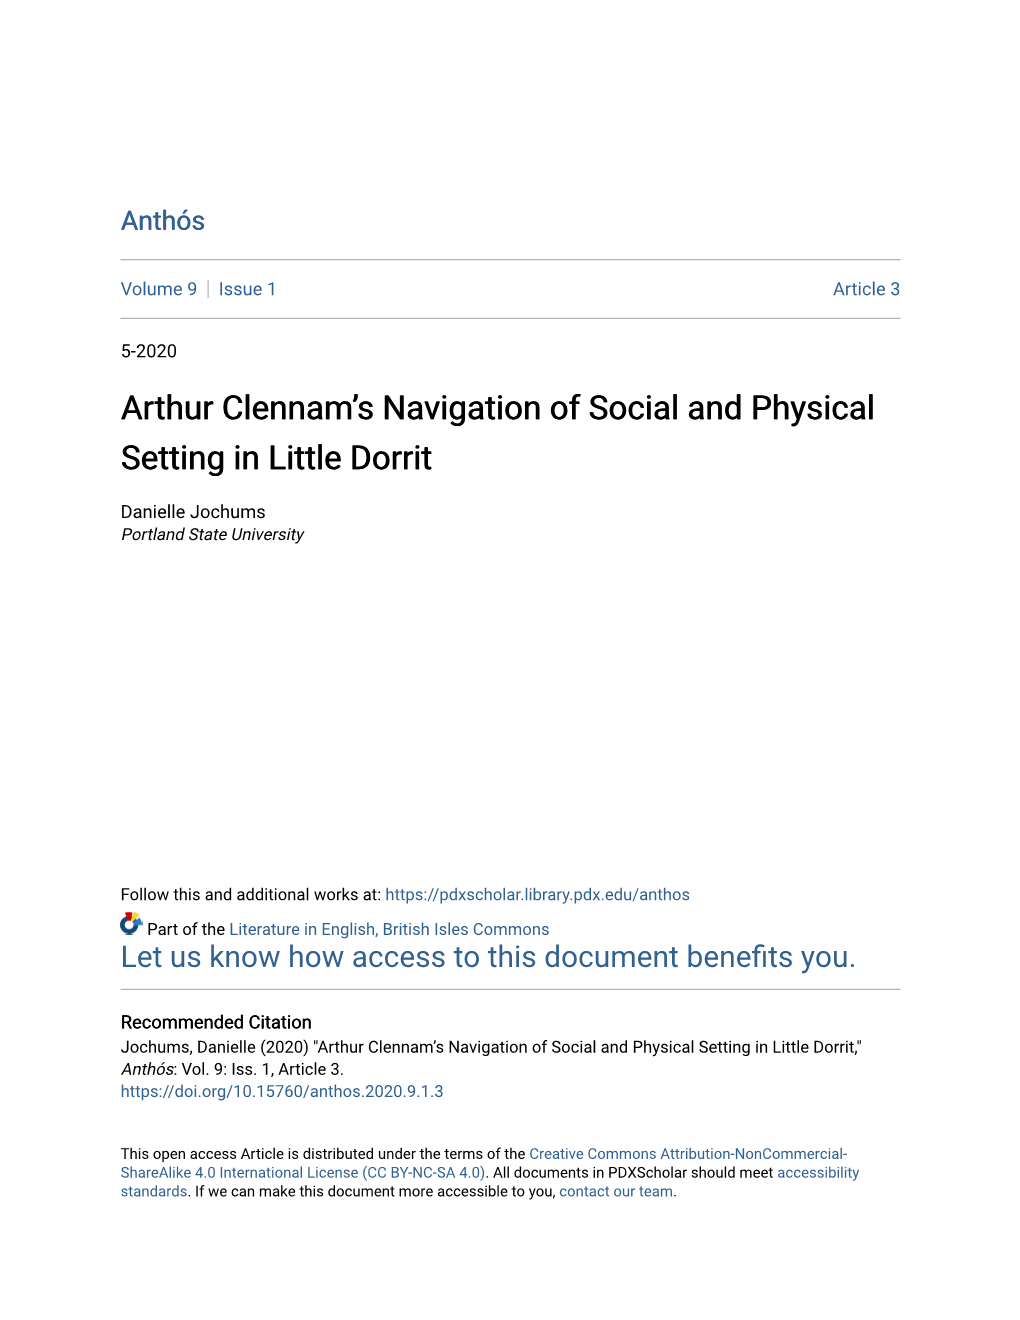 Arthur Clennam's Navigation of Social and Physical Setting in Little Dorrit